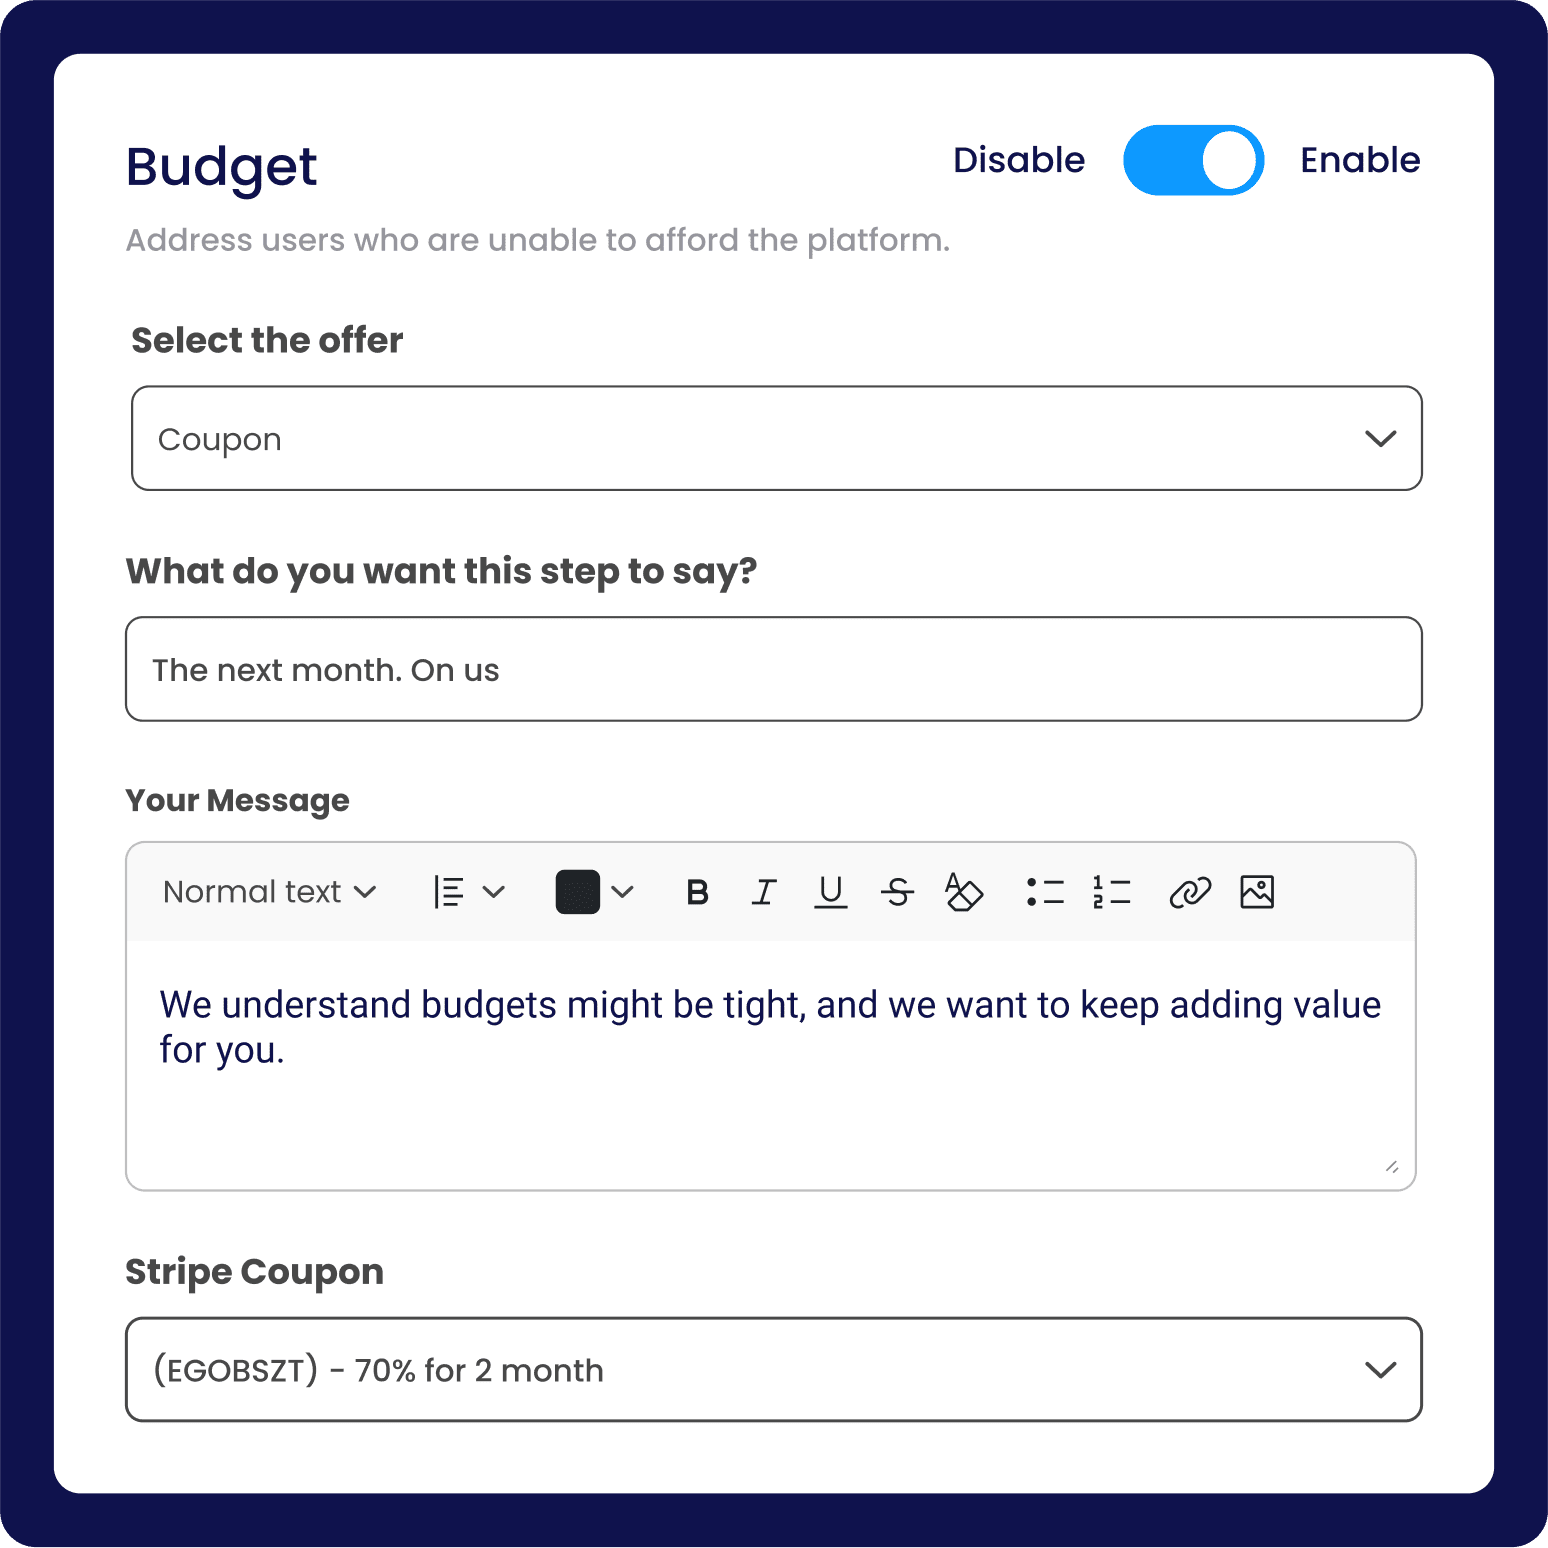 Budget pop-up